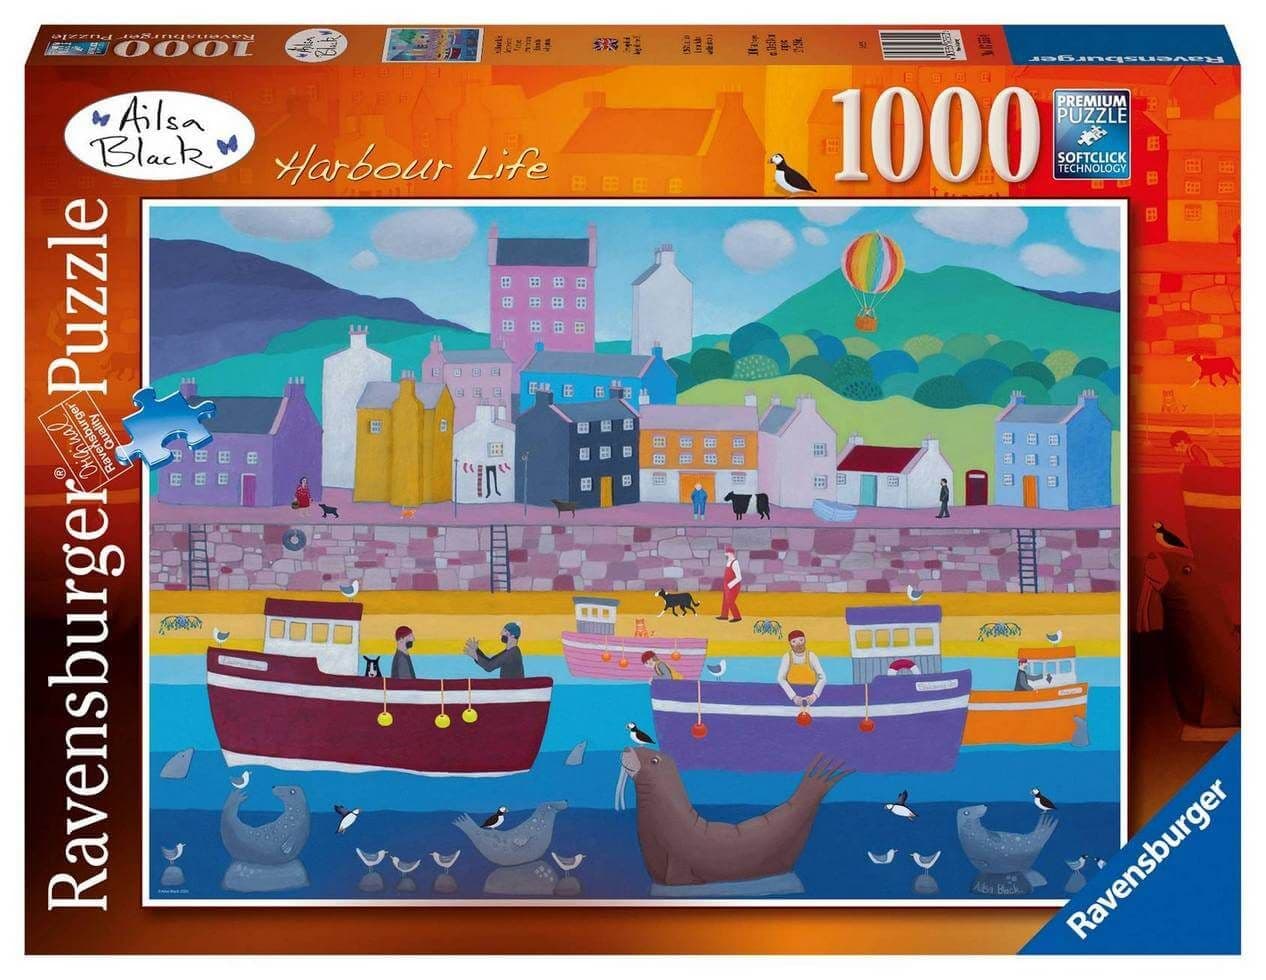 Ravensburger - Alisa Black Harbour Life - 1000 Piece Jigsaw Puzzle